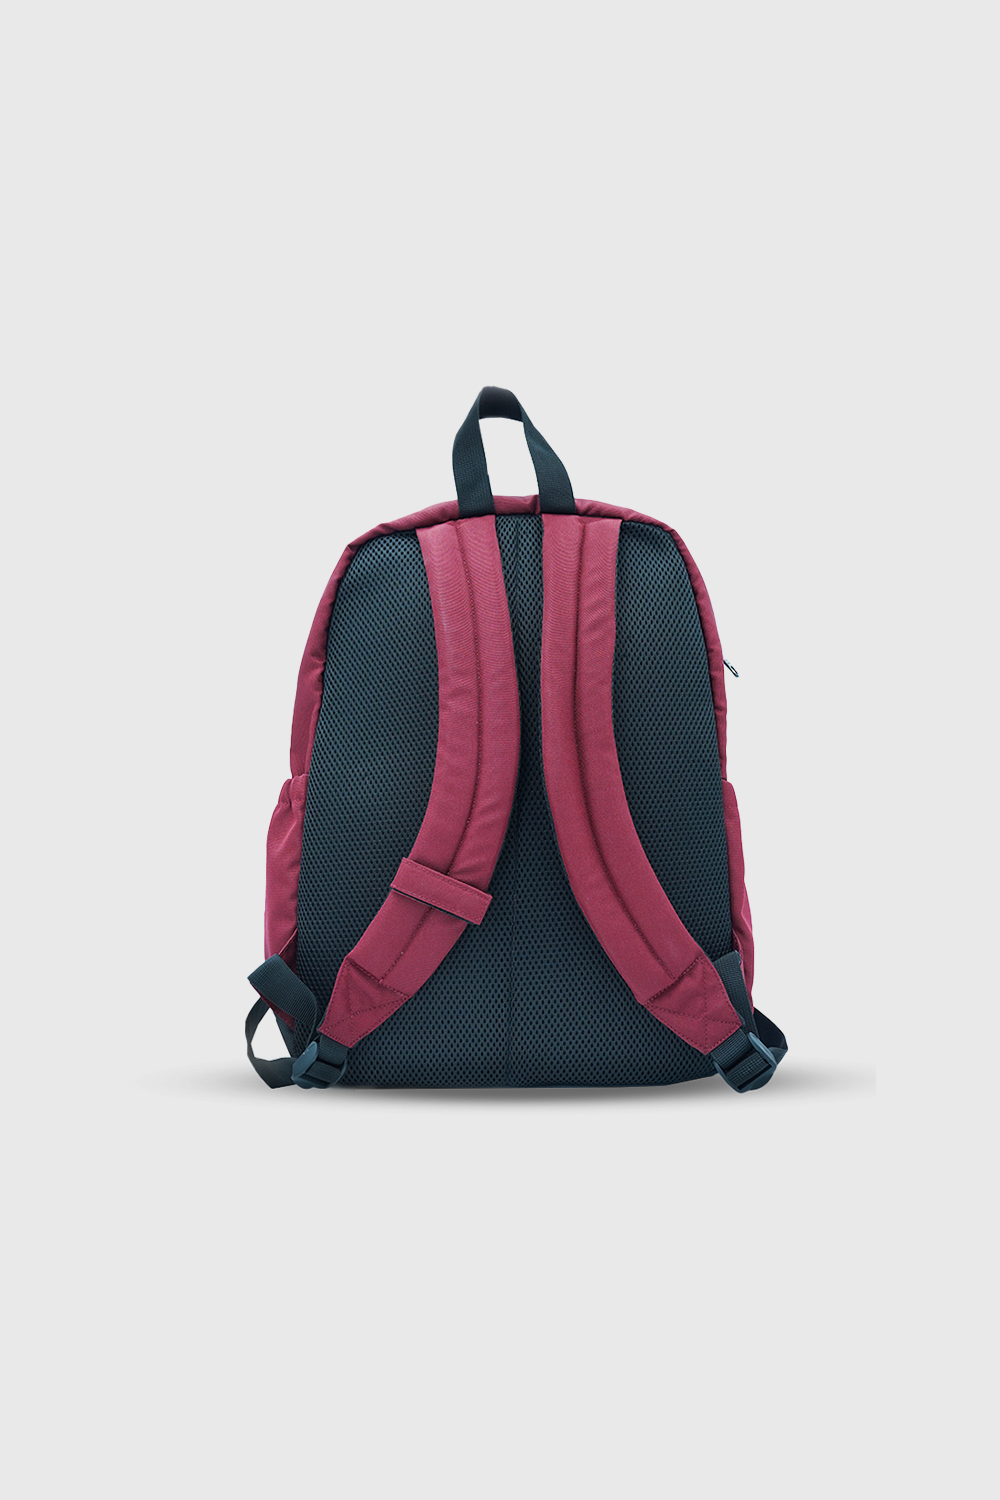 Zalmi Markhor Laptop Backpack